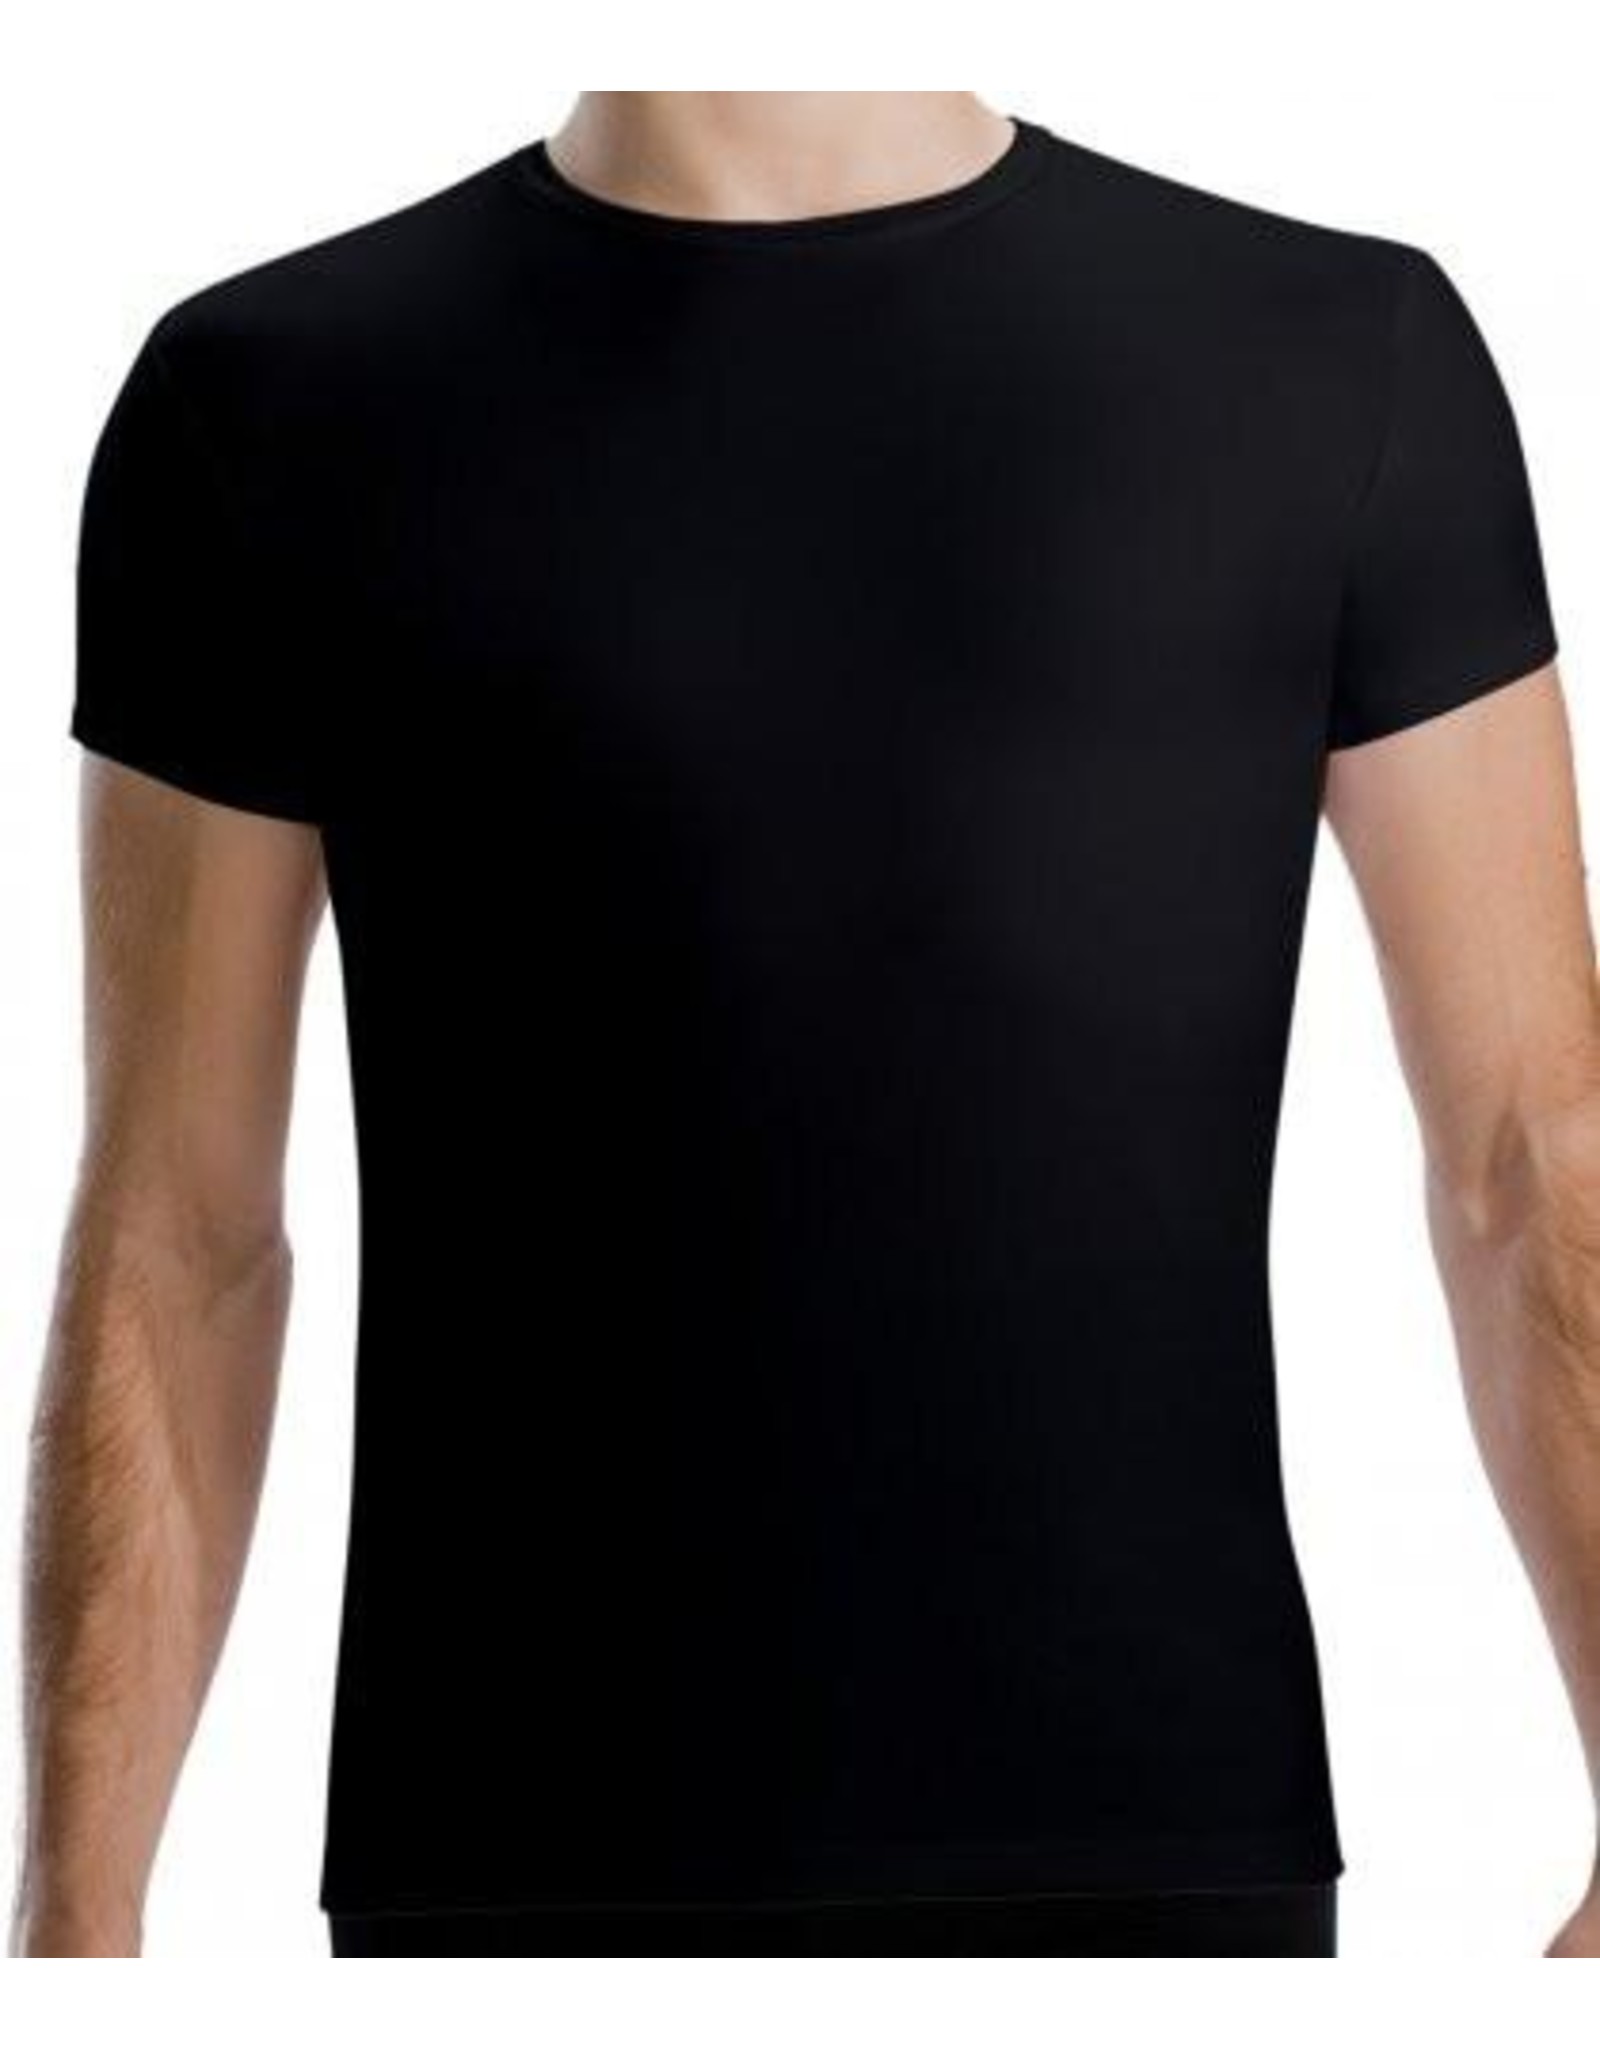 Motionwear Men's Cap Sleeve Fitted Top (MM7207)